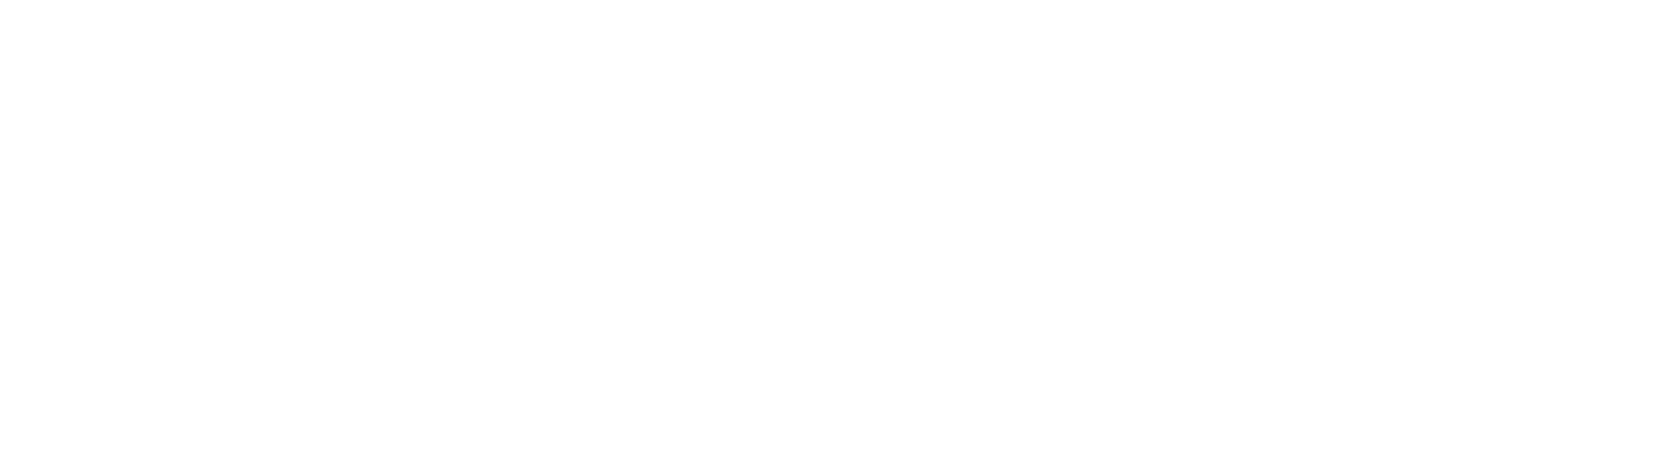 ImmunityBio logo large for dark backgrounds (transparent PNG)